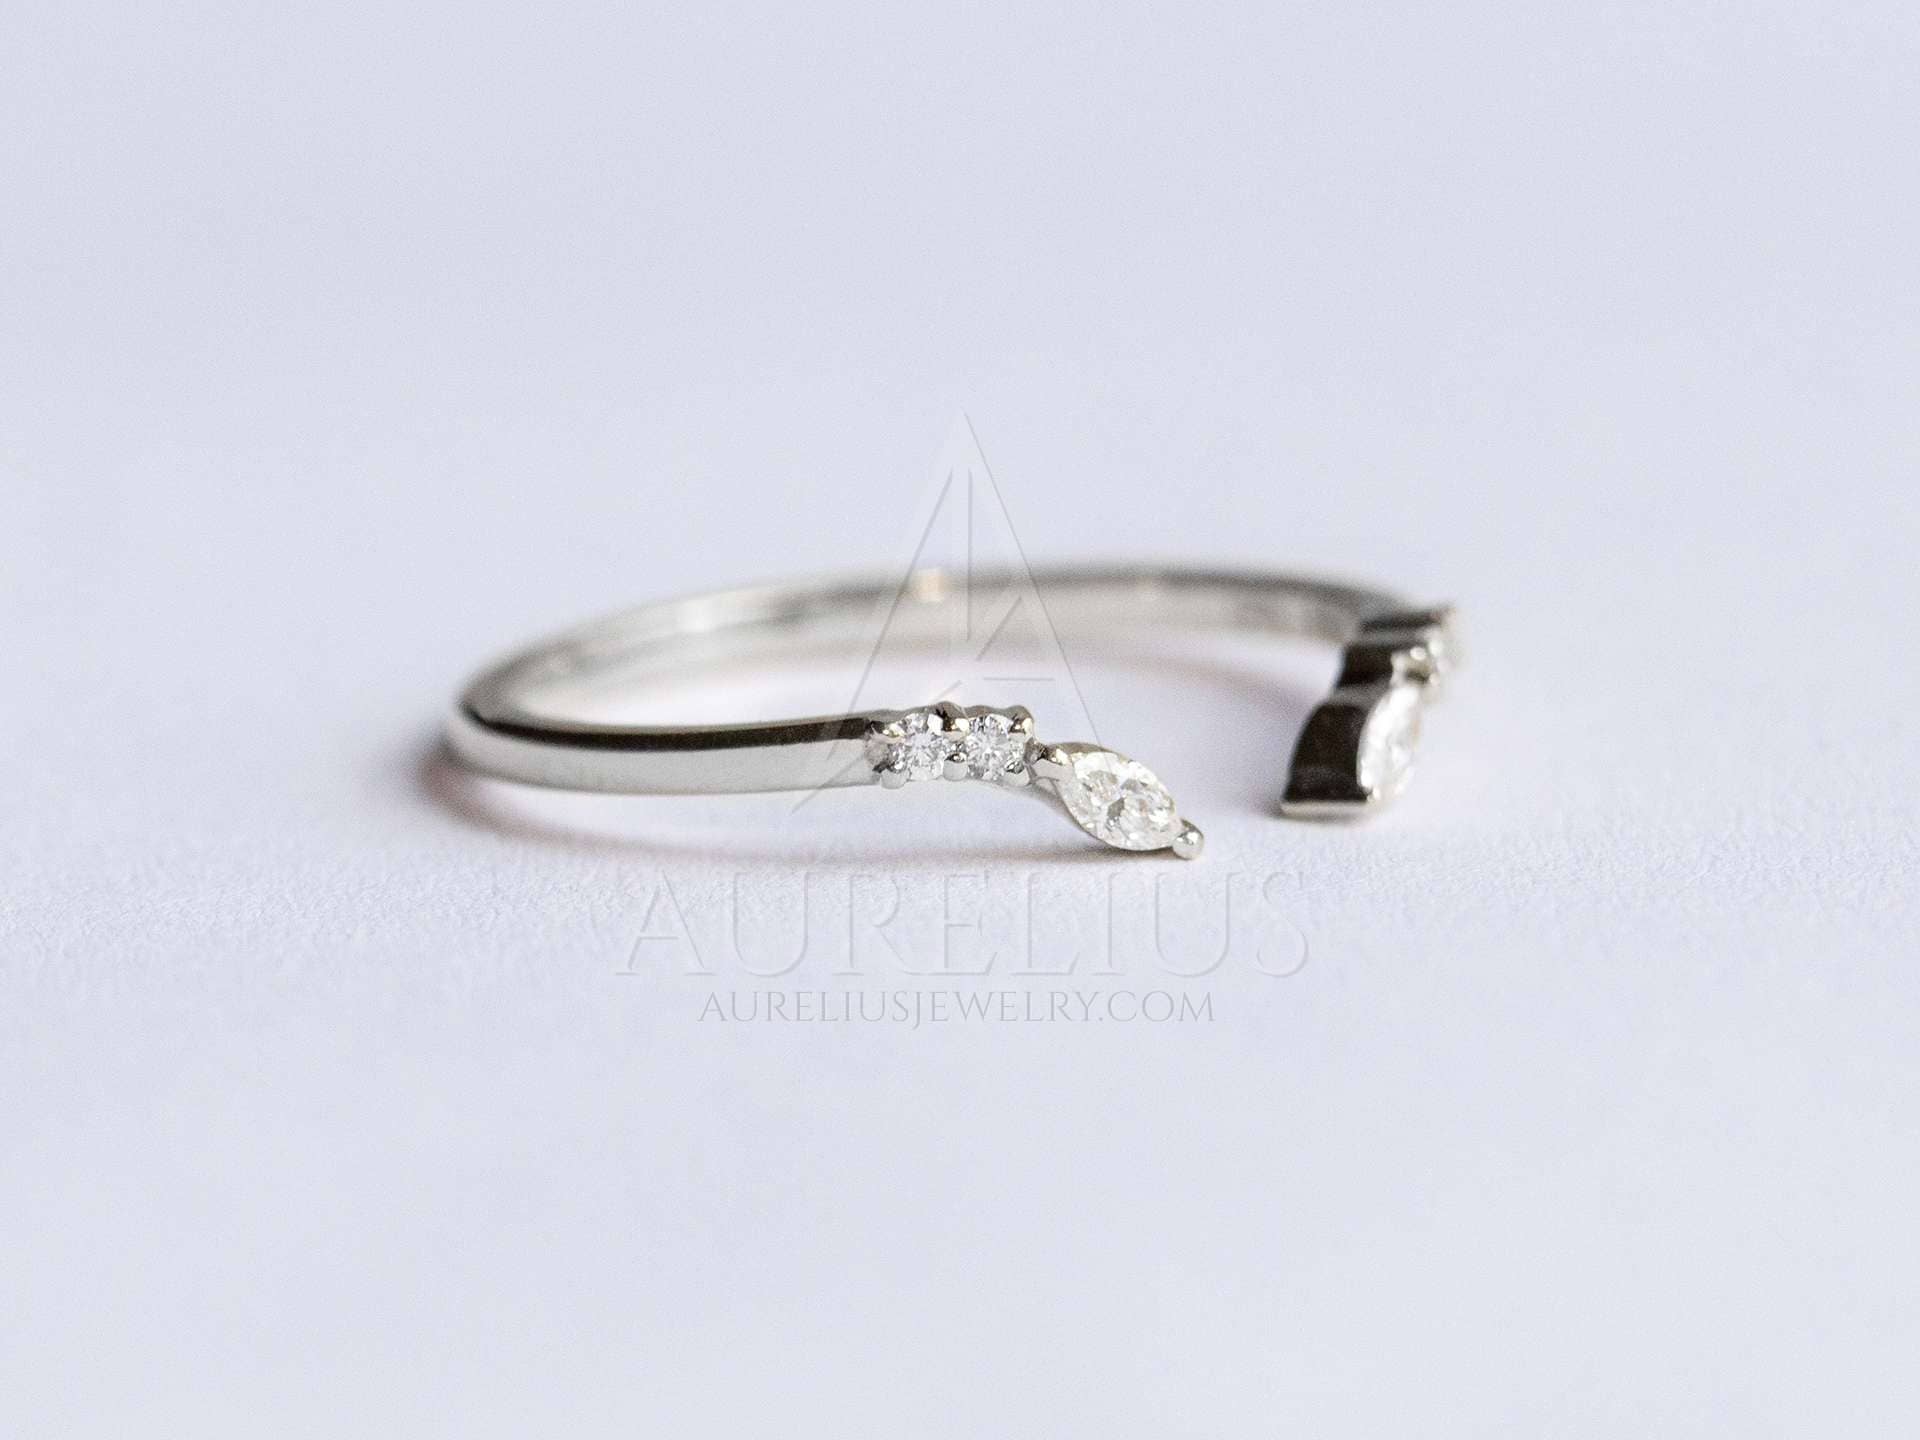 Micro Gold Plated Designer Cz Stone Wedding Ring Online|Kollam Supreme